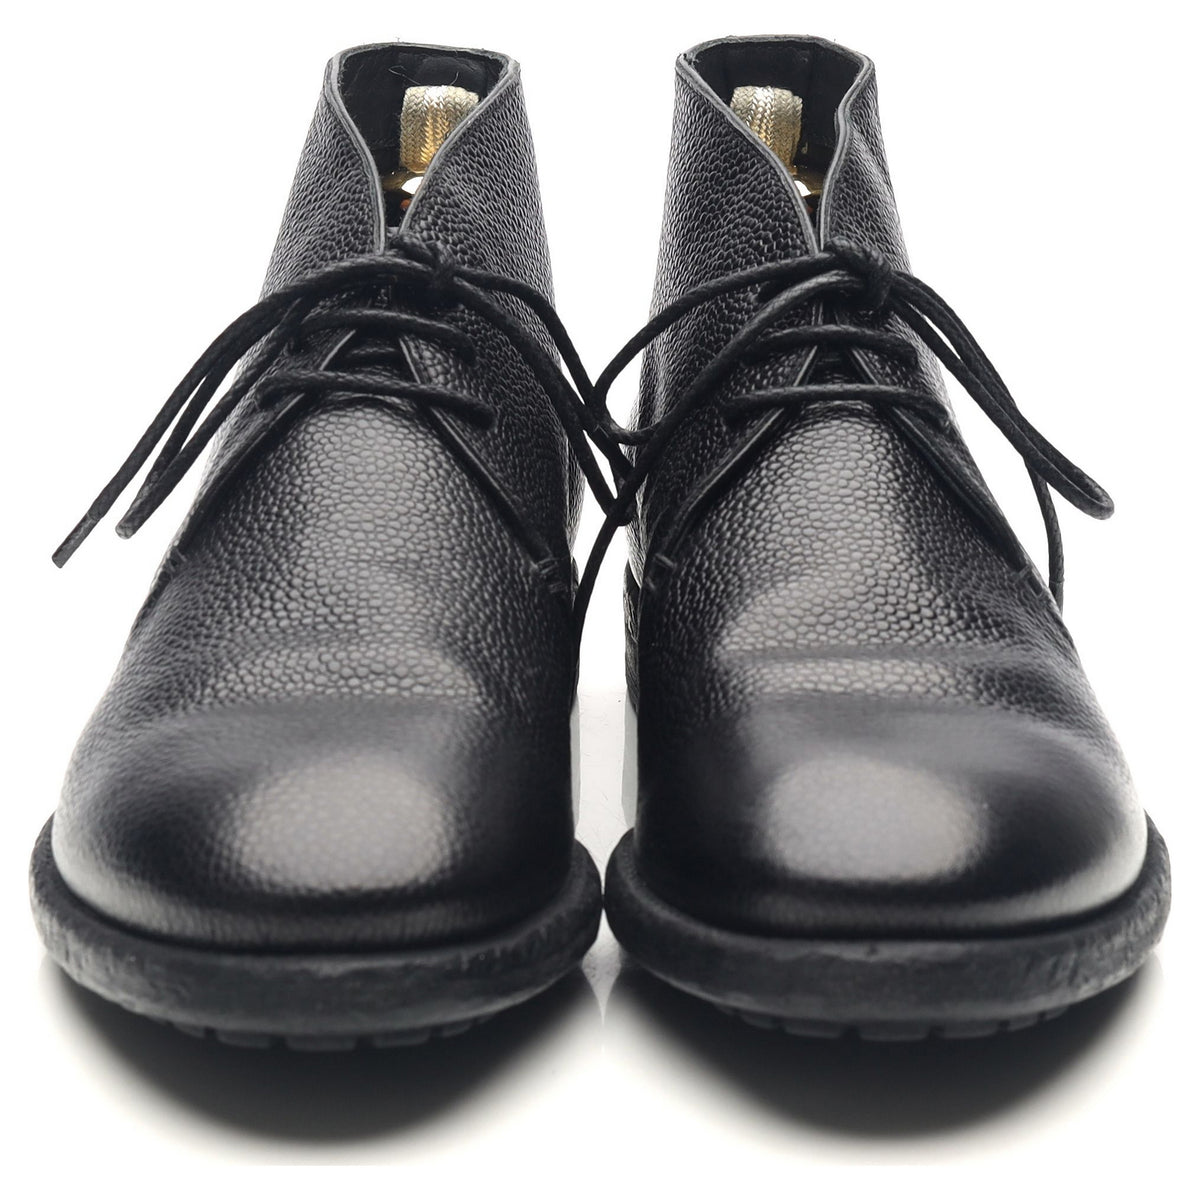 Black Leather Chukka Boots UK 6 EU 40